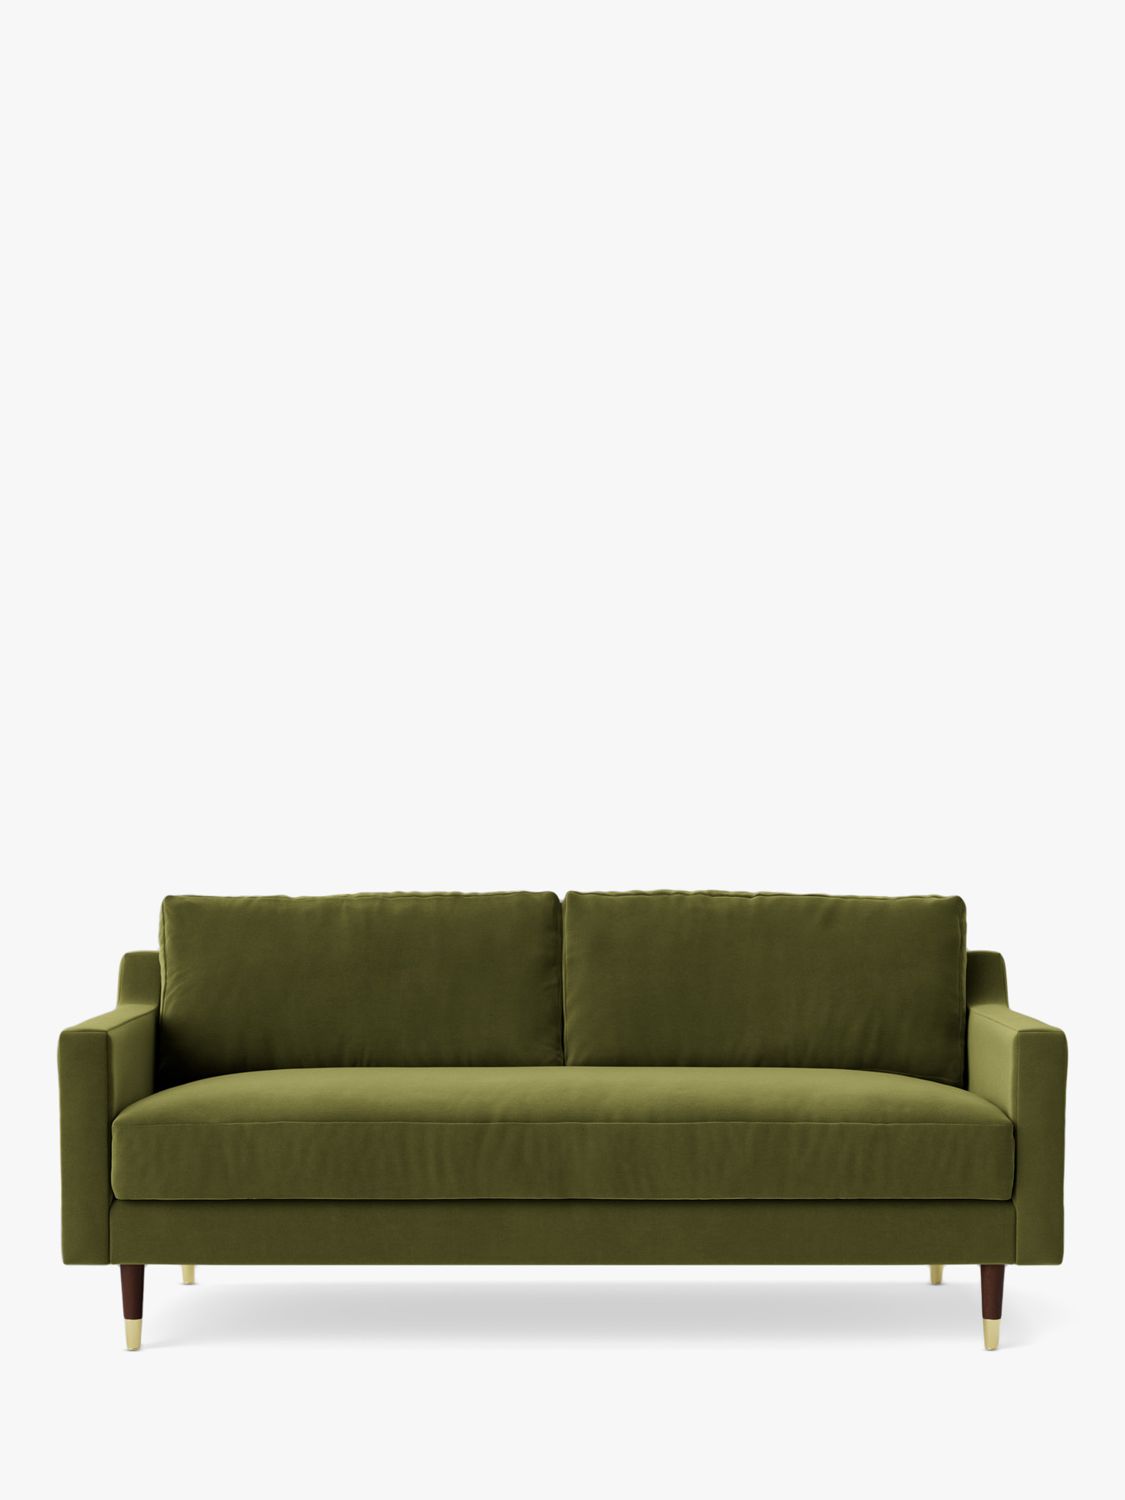 Rieti Range, Swoon Rieti Medium 2 Seater Sofa, Easy Velvet Fern